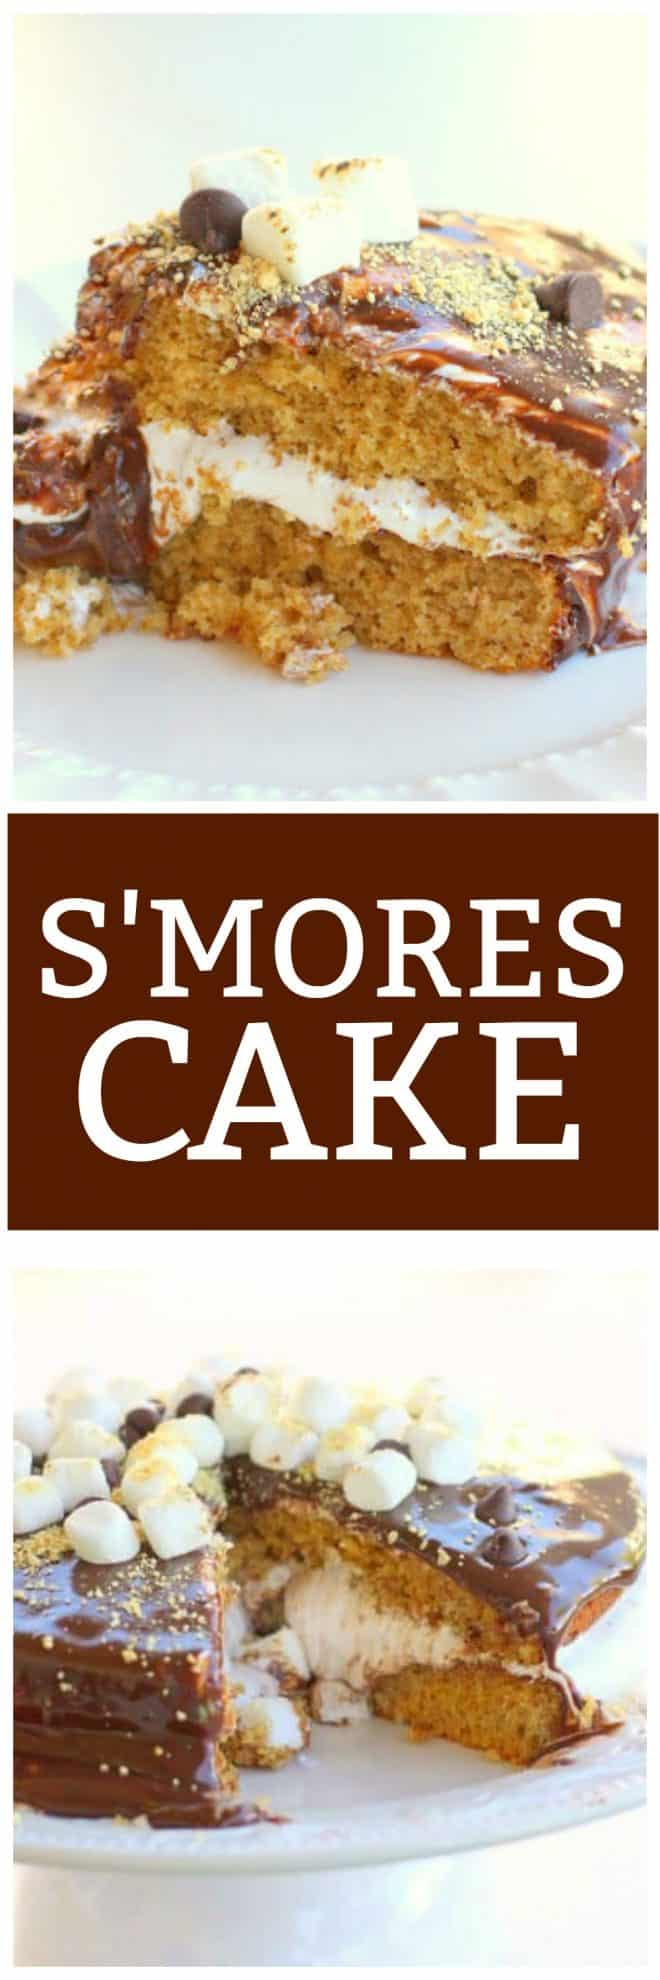 s'mores cake